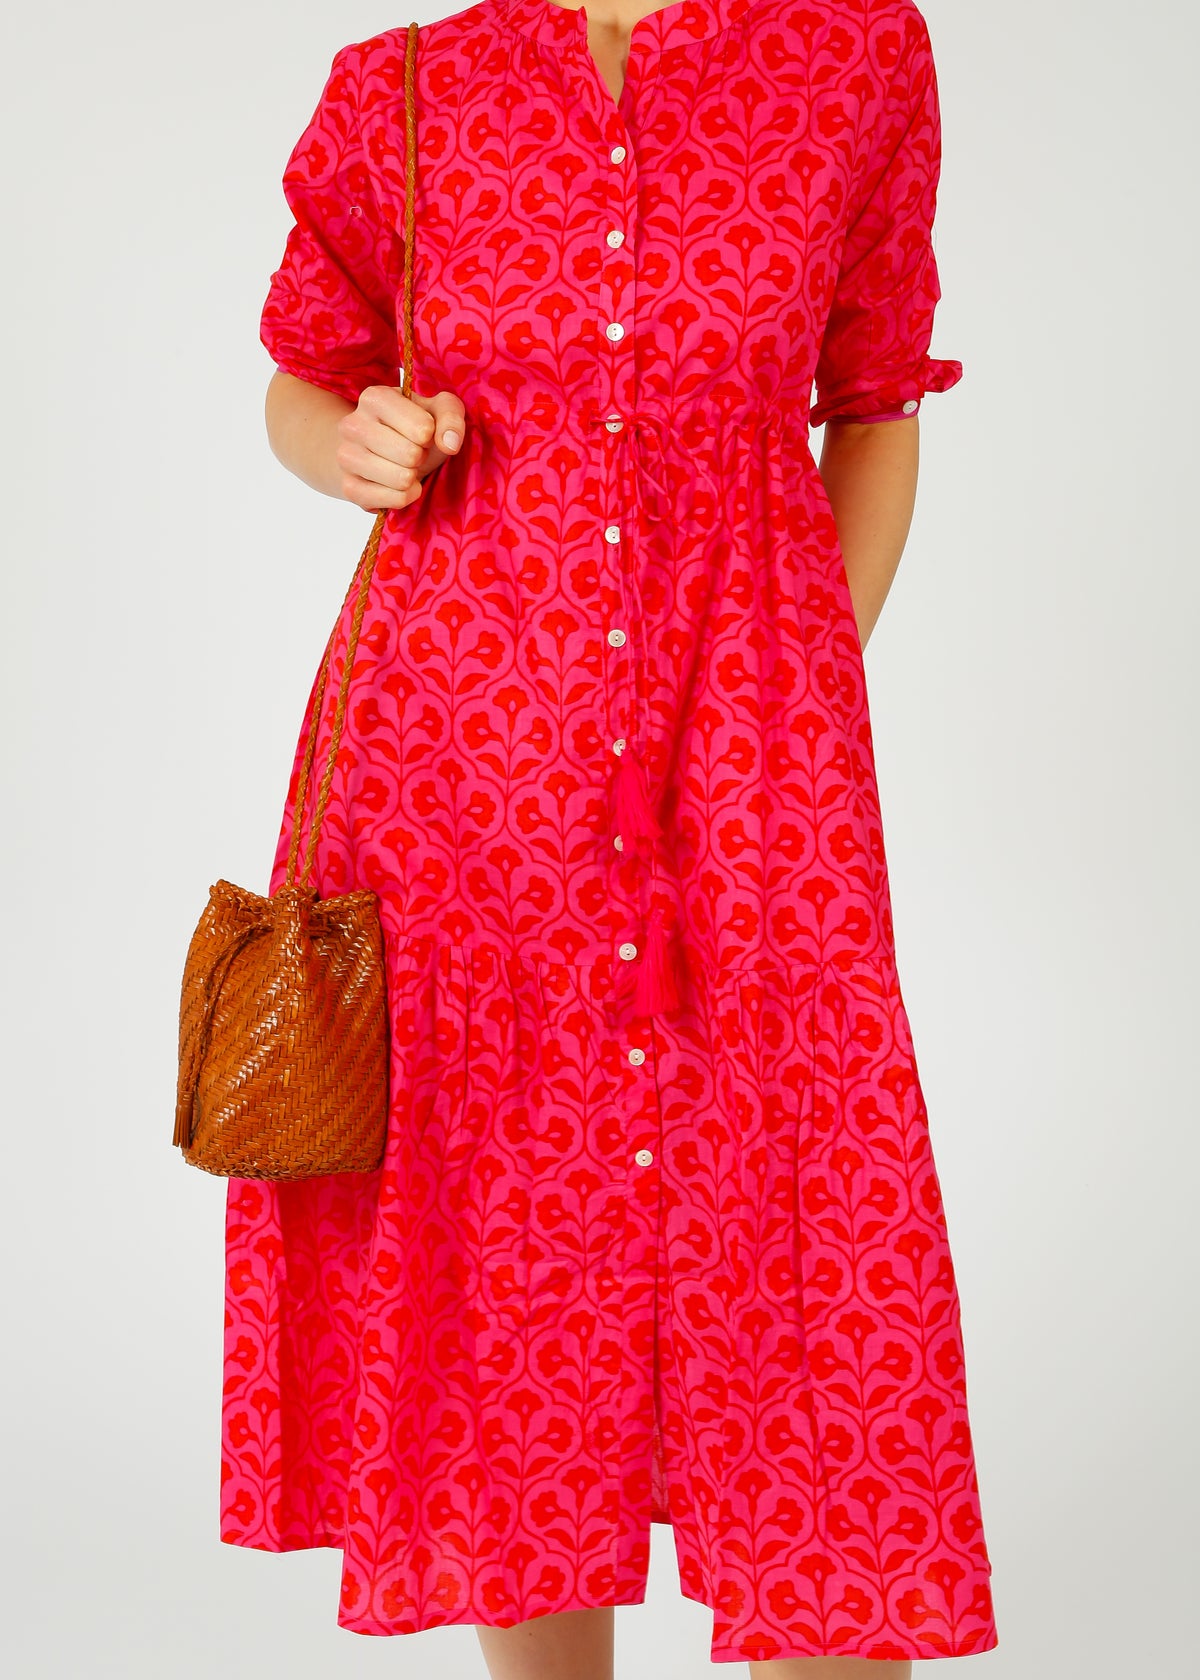 DREAM Tuscany Dress in Kajri Pink